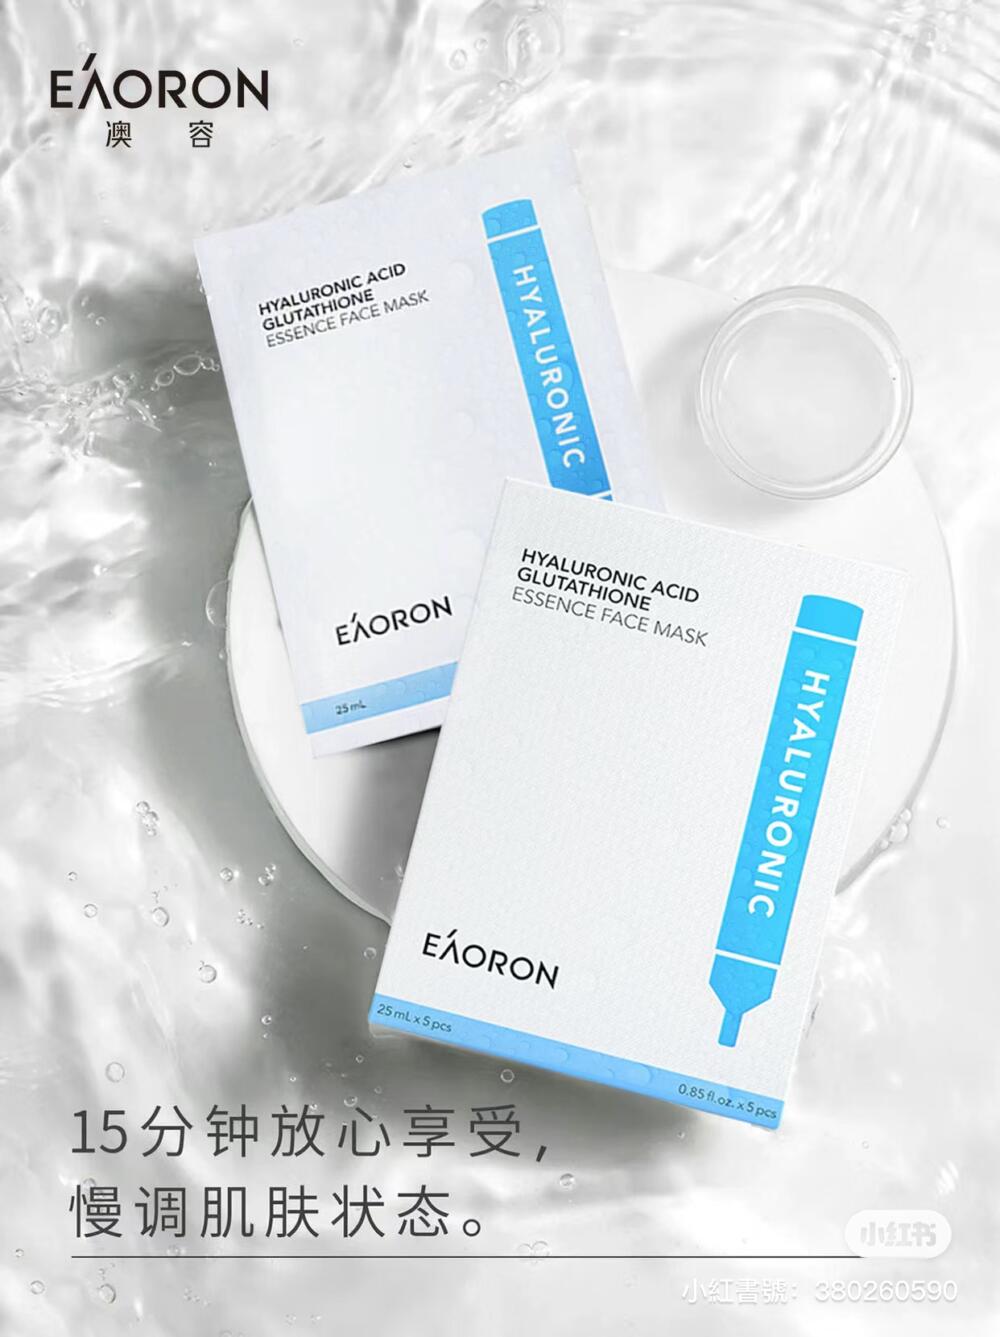 EAORON Hyaluronic Acid Glutathione Essence Face Mask 新版玻尿酸水光白膜 25ml X 5片